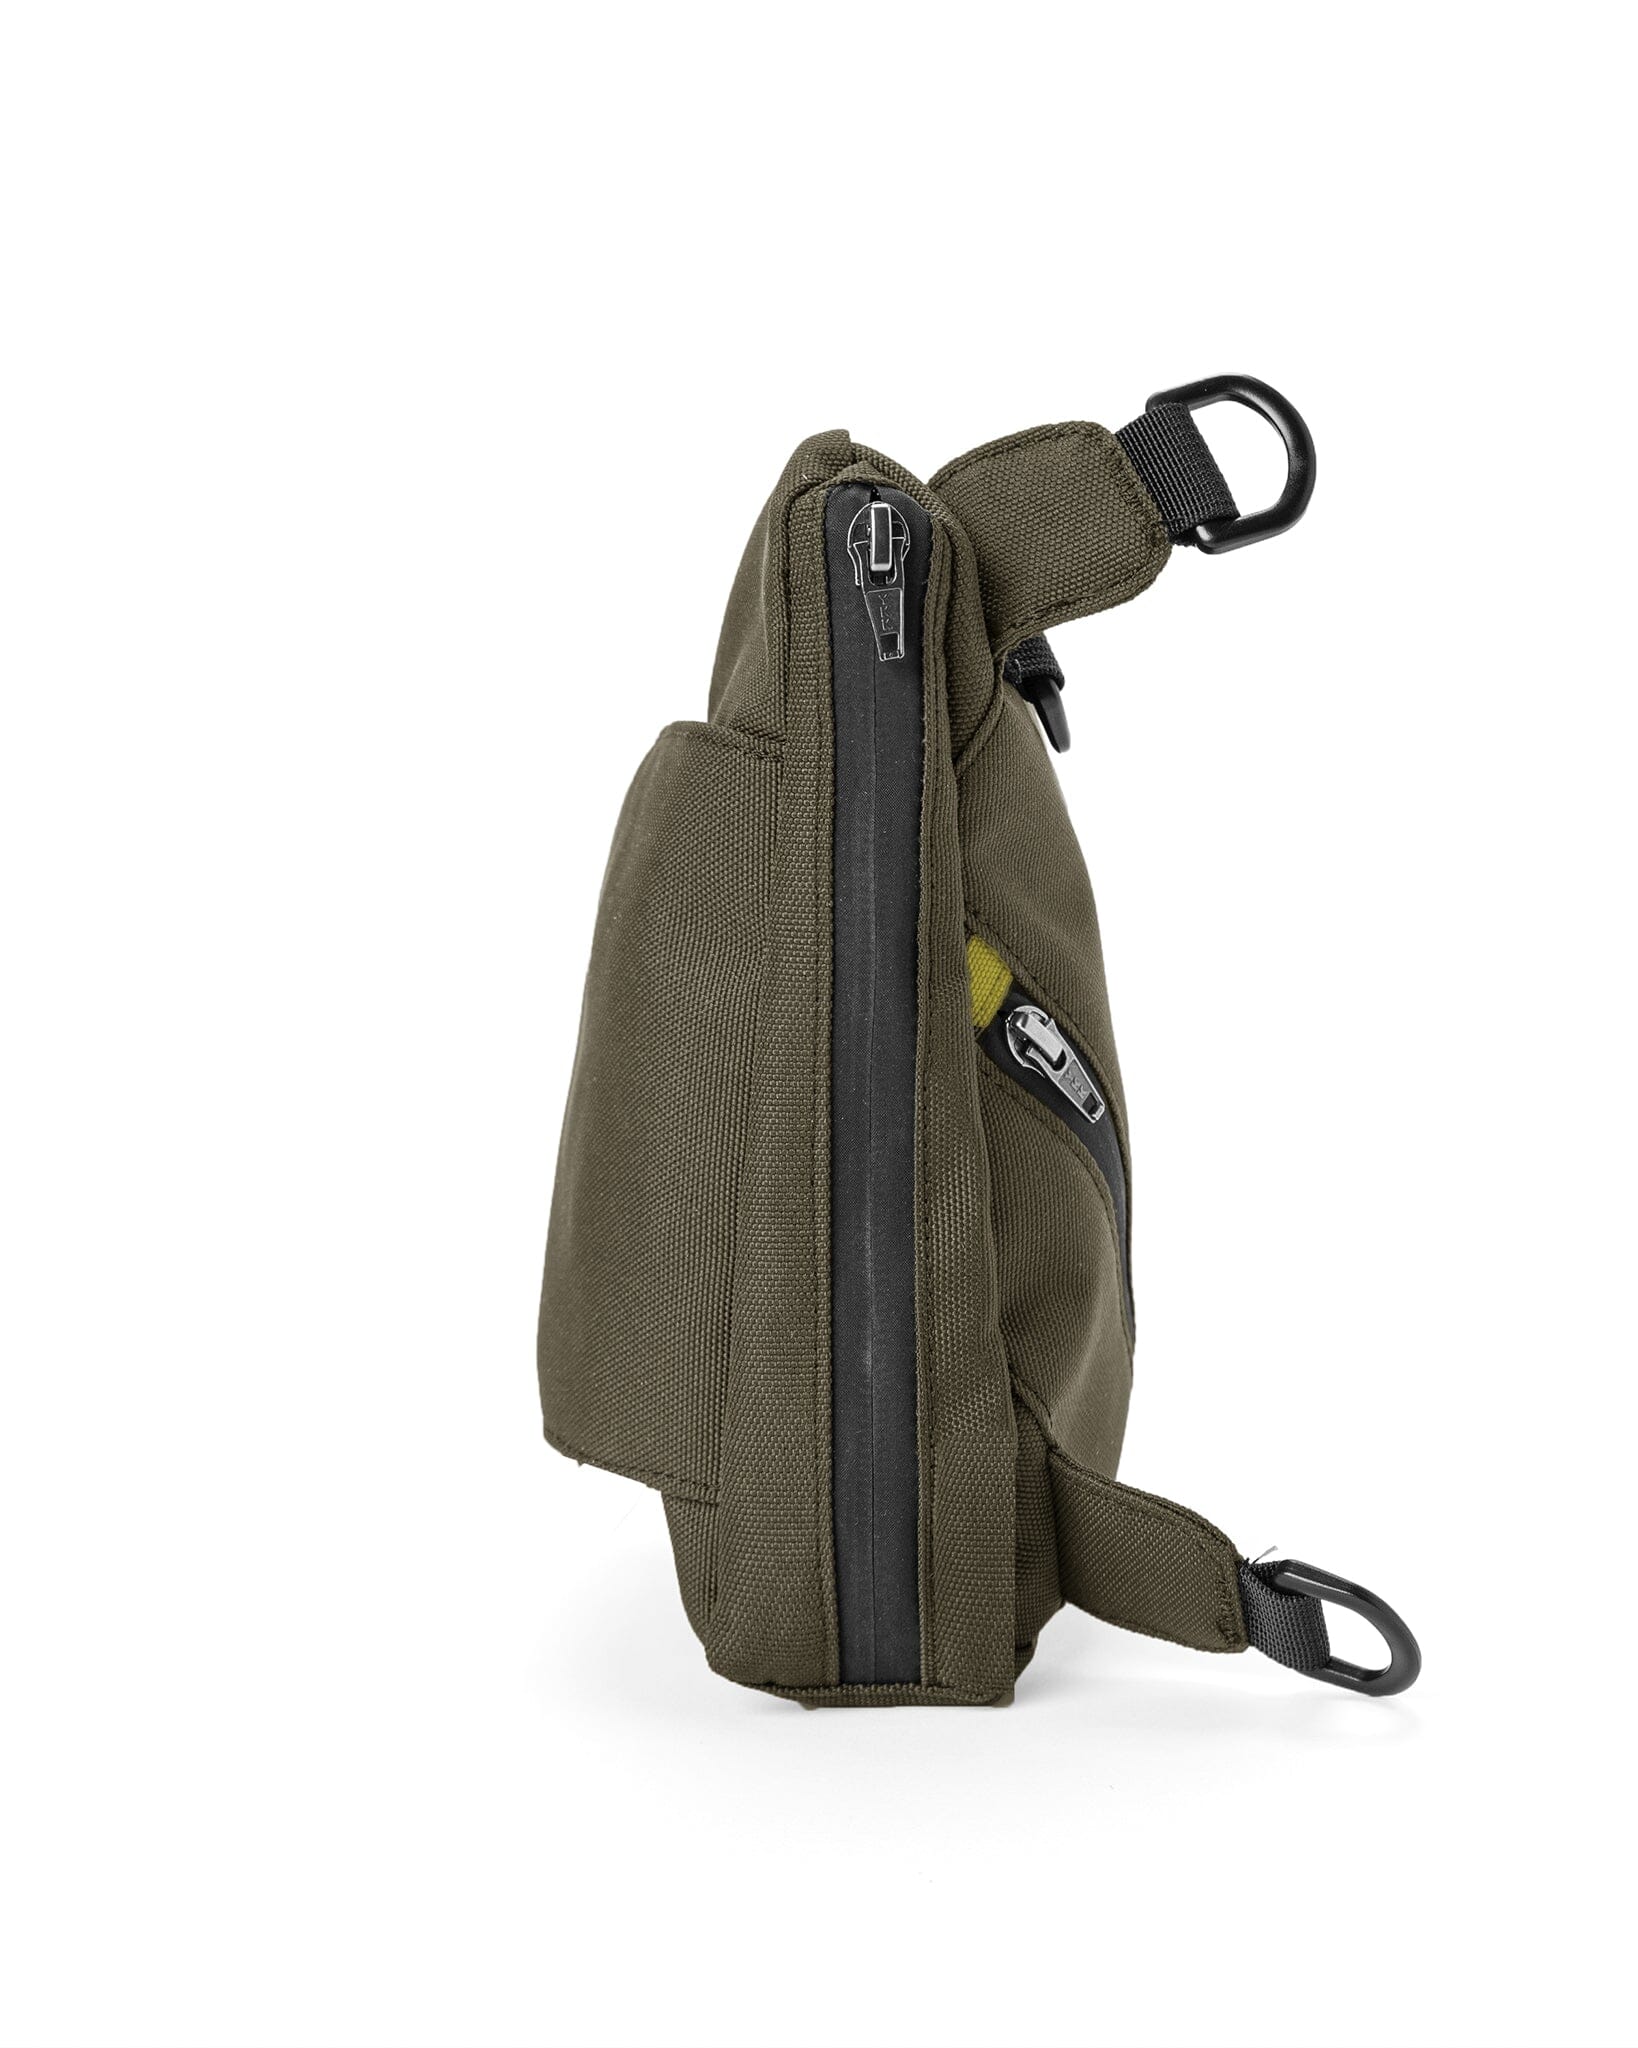 Small Carry - Defiant Olive Cordura Bag bolstr   